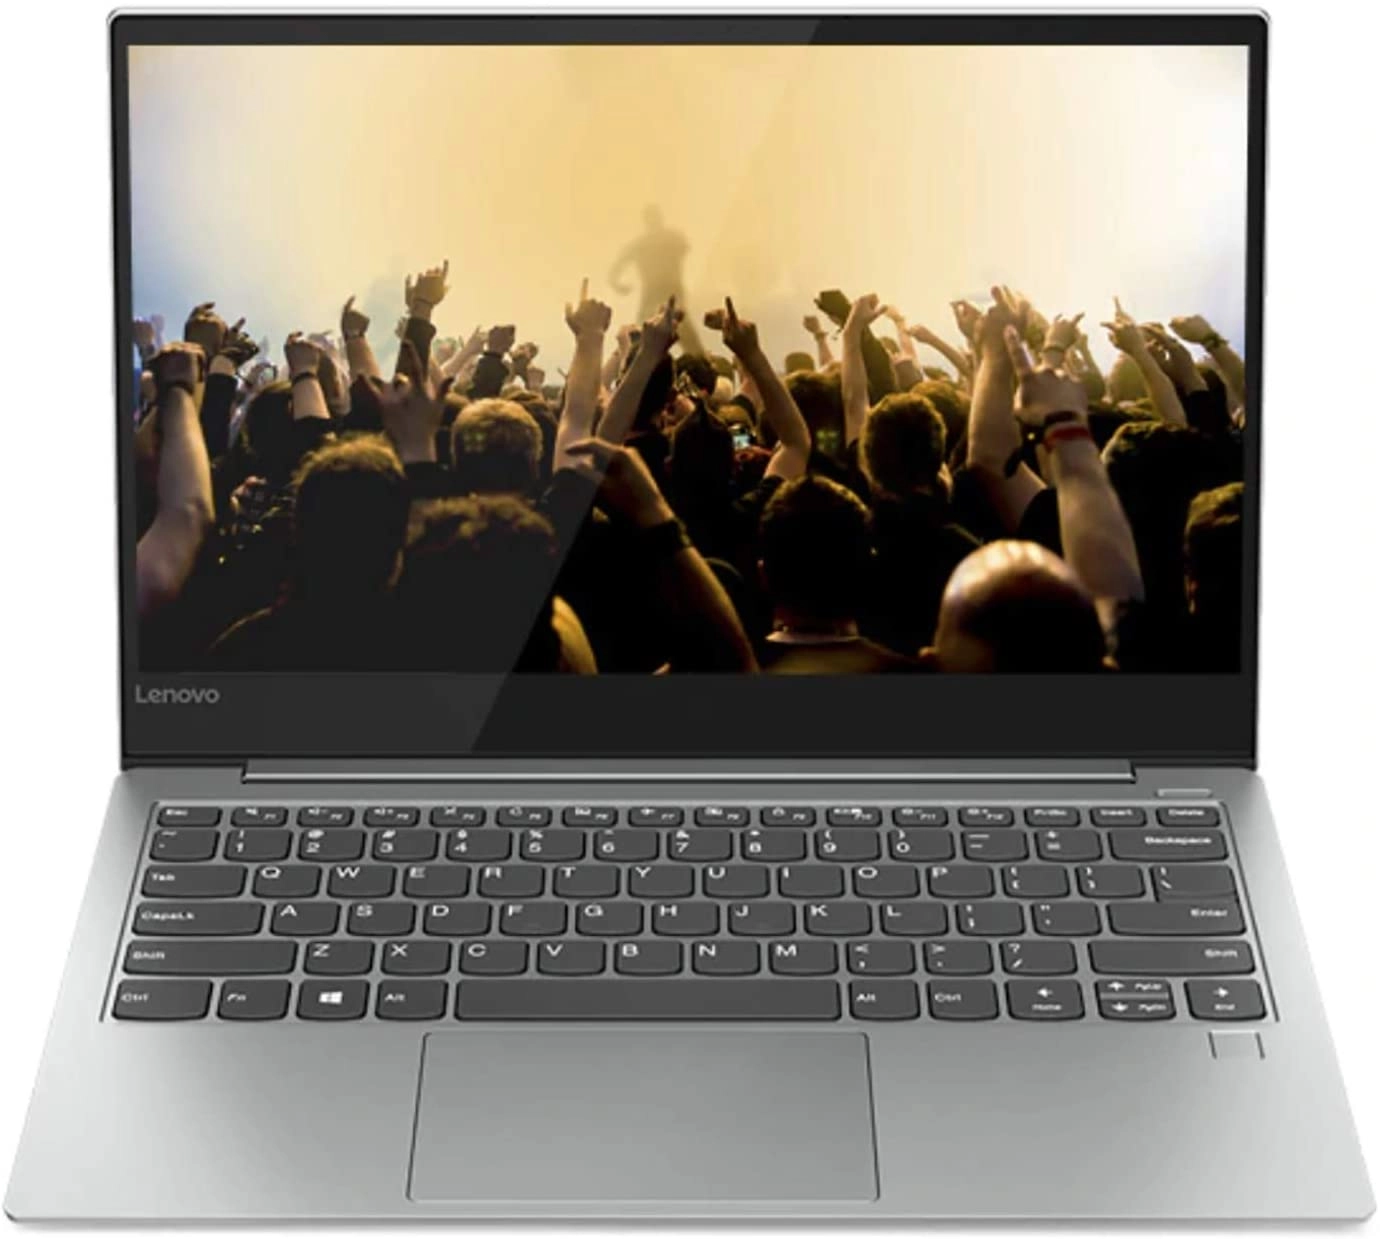 Lenovo S730-13IWL laptop image